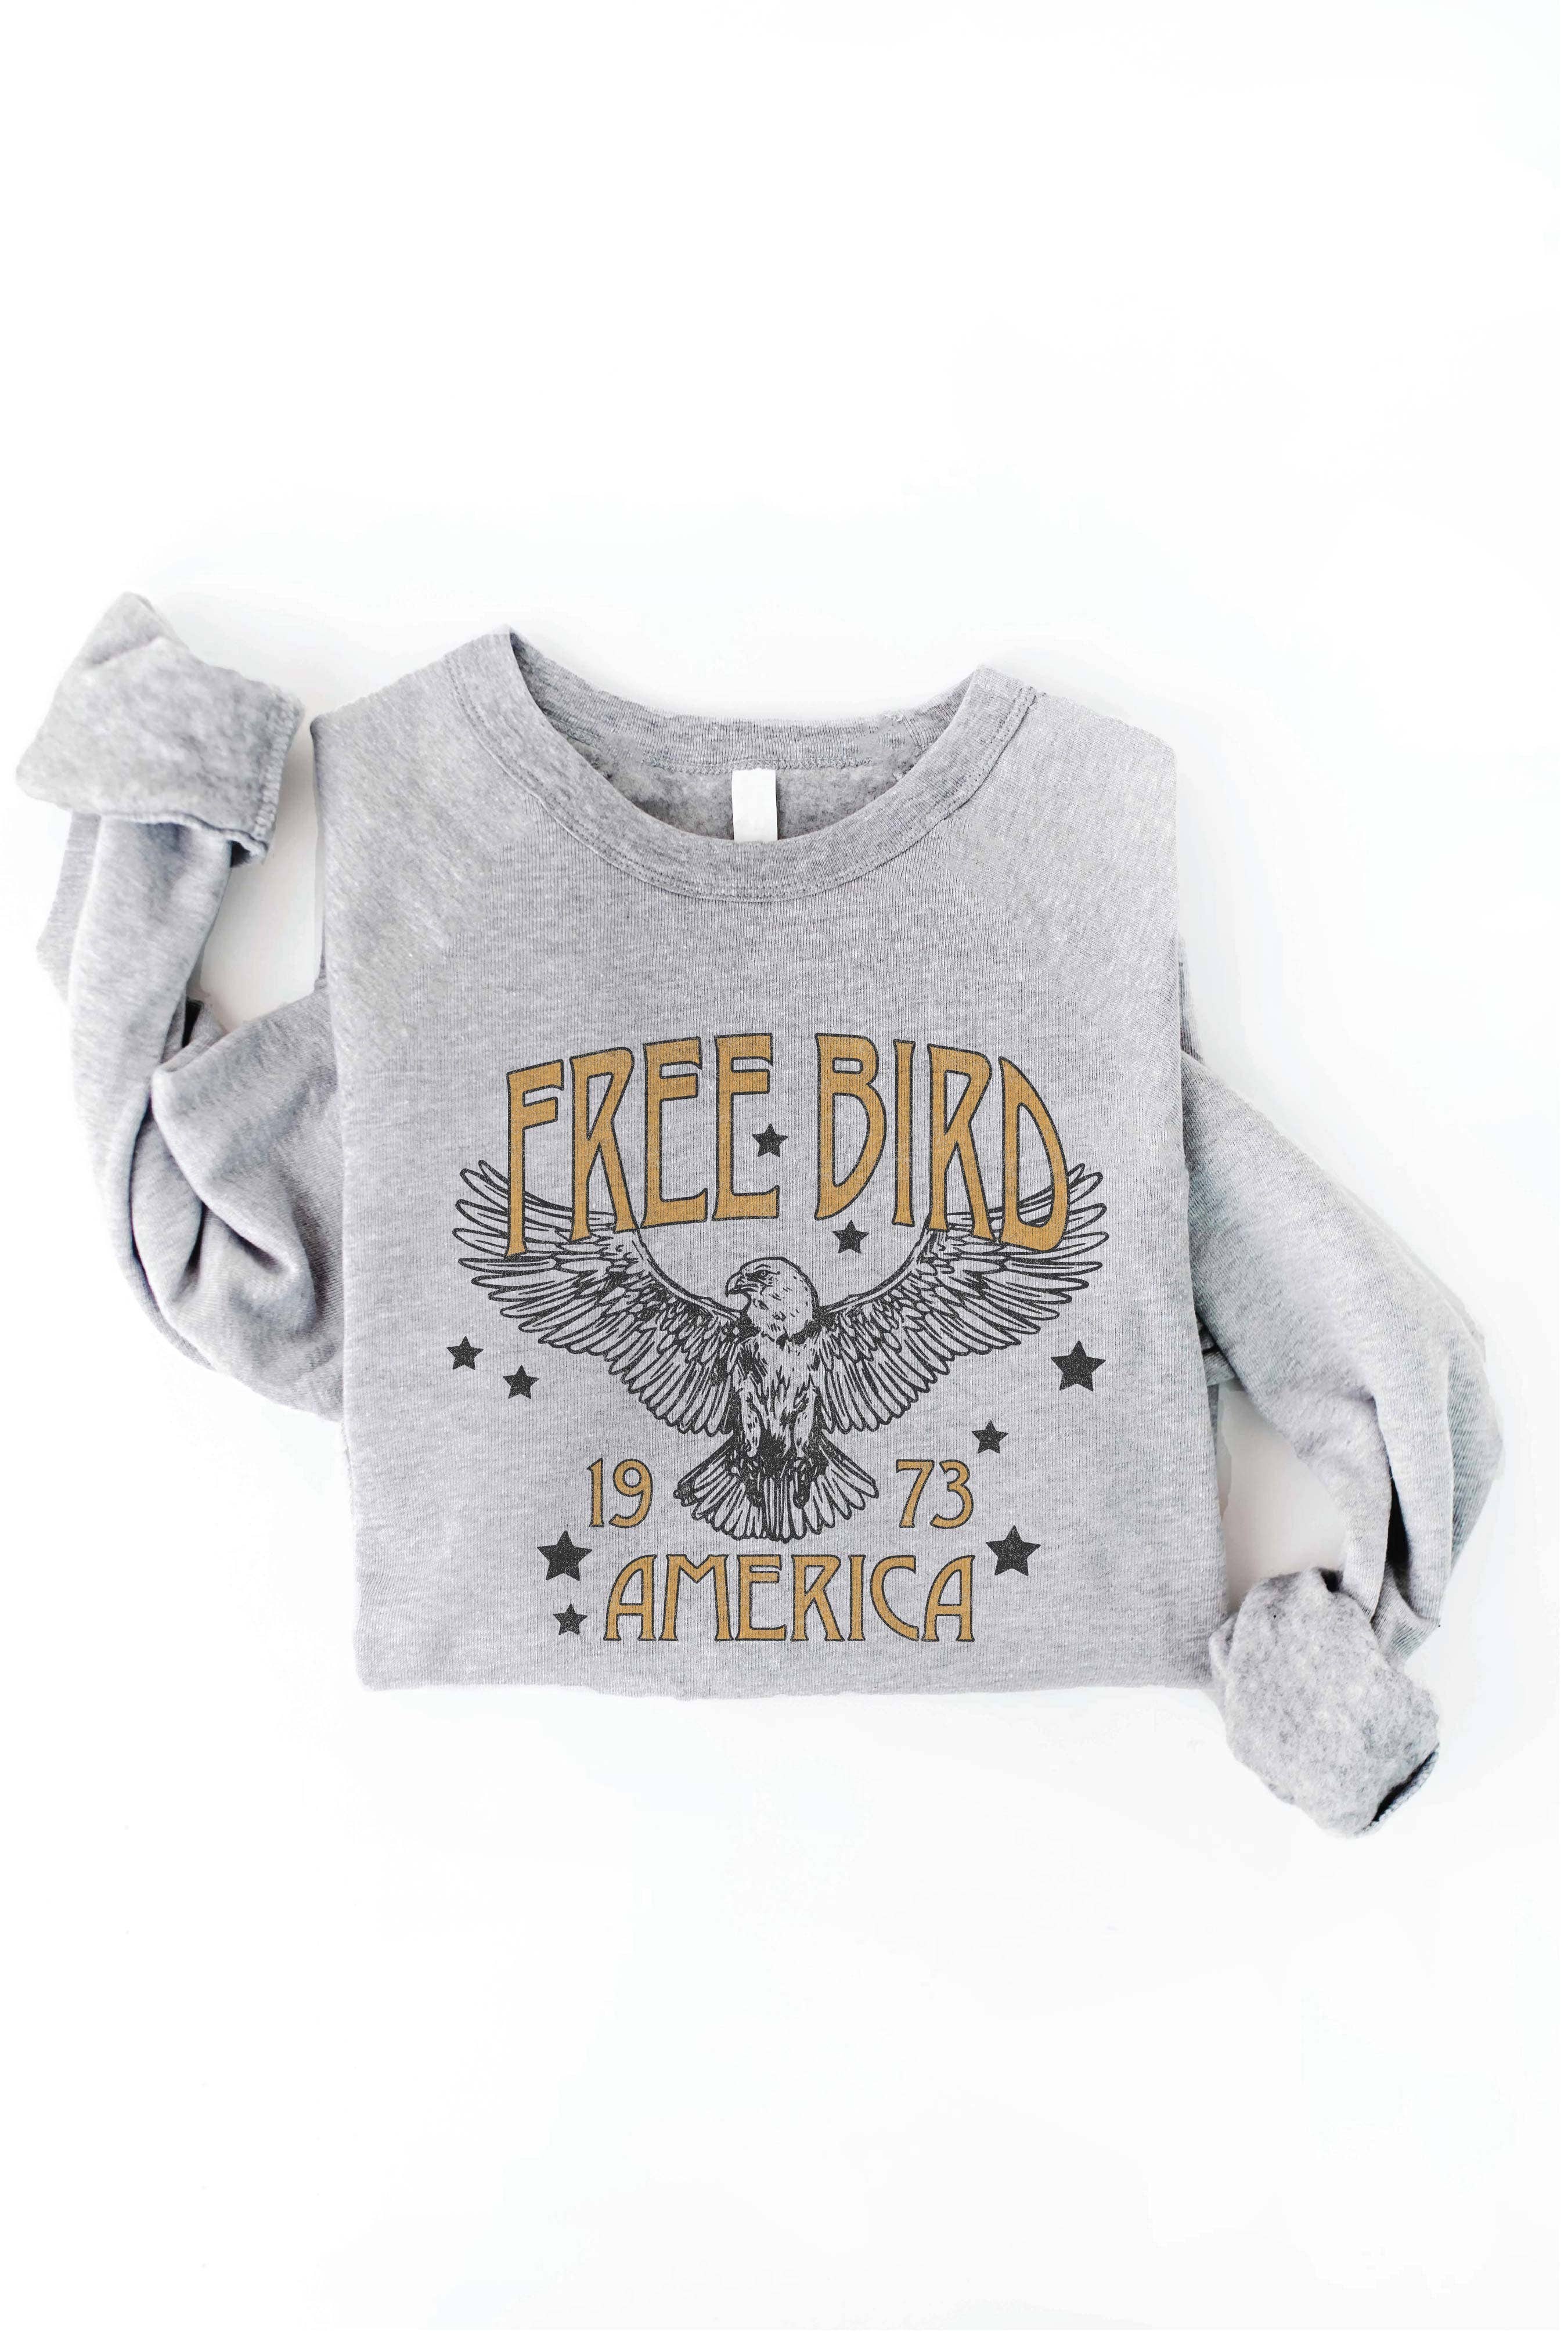 FREE BIRD Graphic Sweatshirt